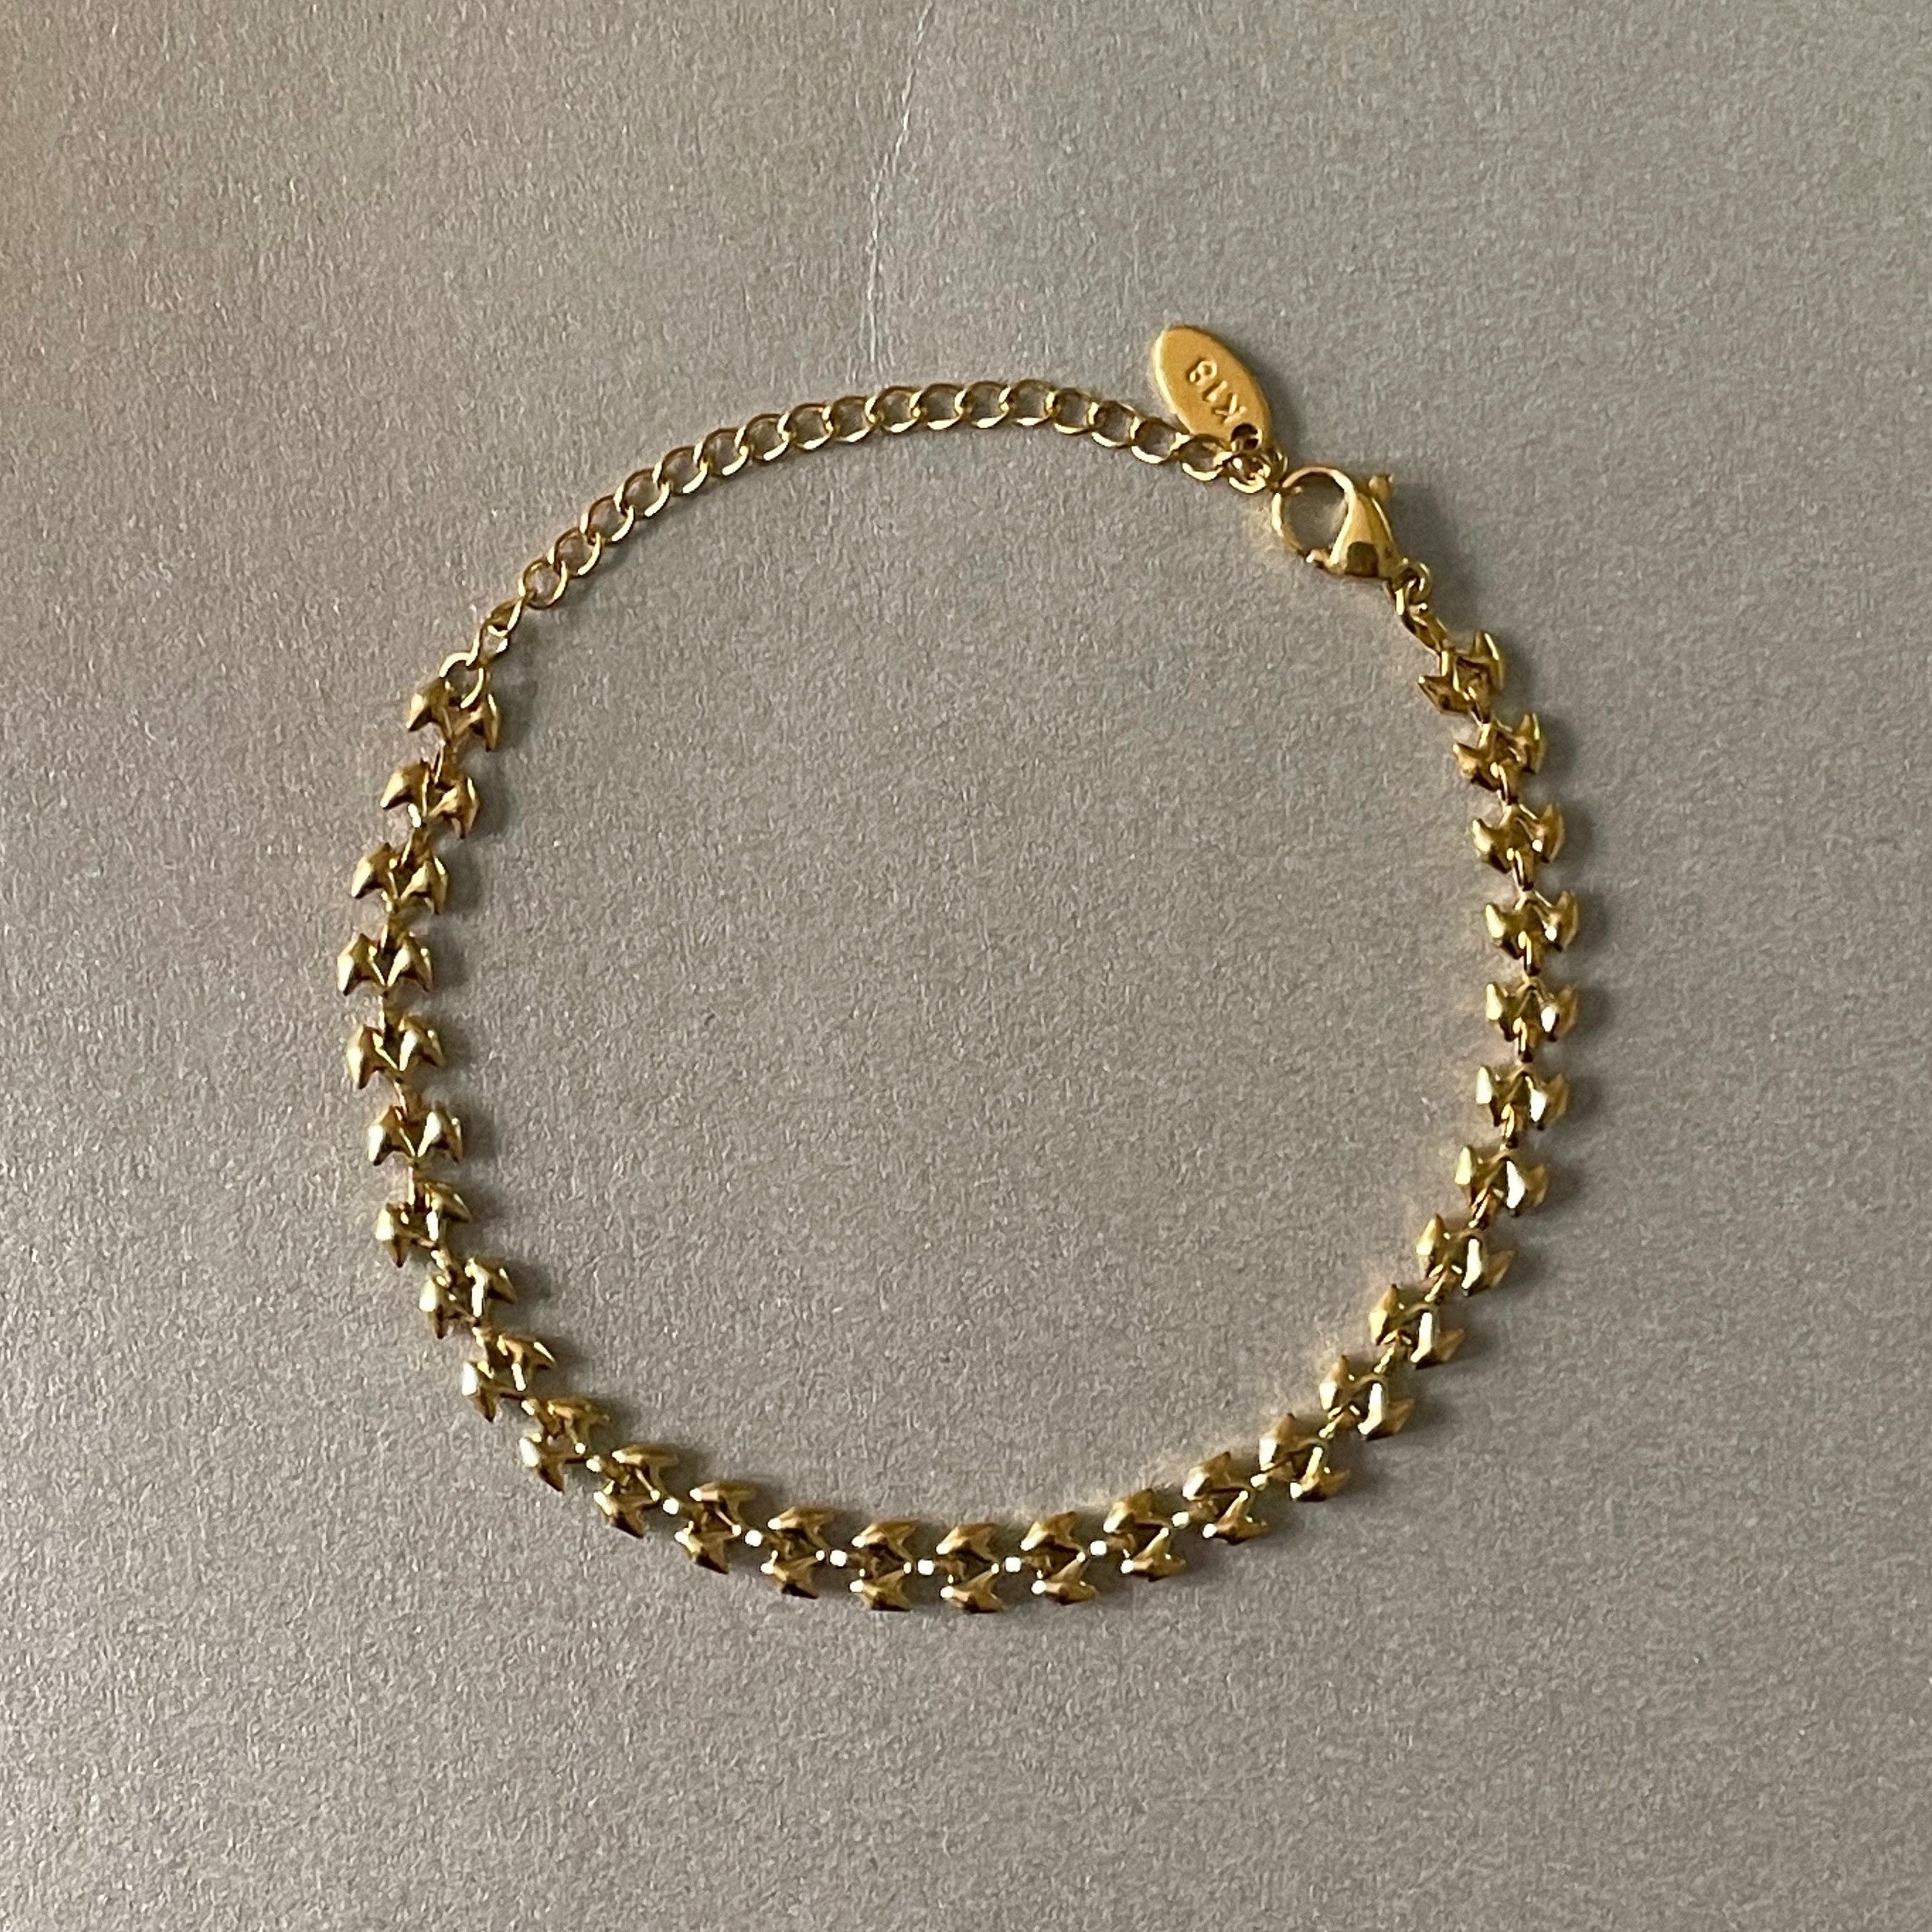 Capri Luxe 18k Gold Plated Textured Bracelet